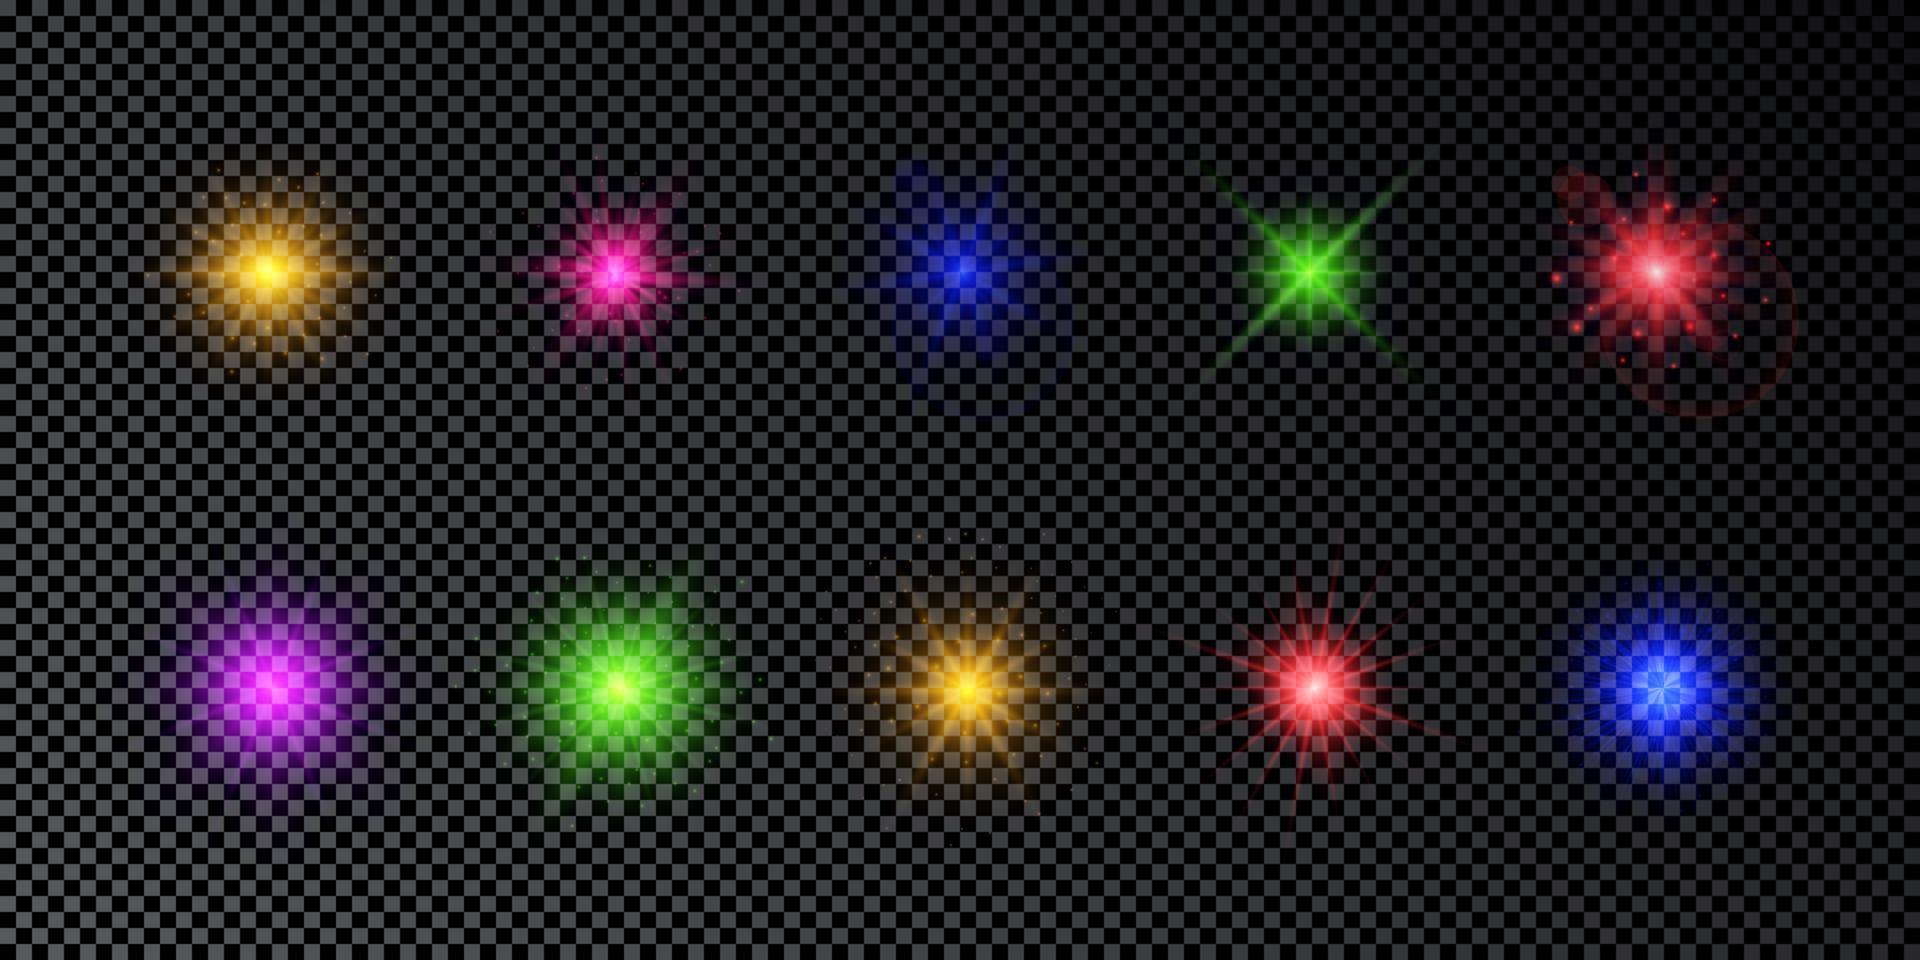 Light effect of lens flares. Set of multicolor glowing lights starburst effects with sparkles on a dark transparent background. Vector illustration